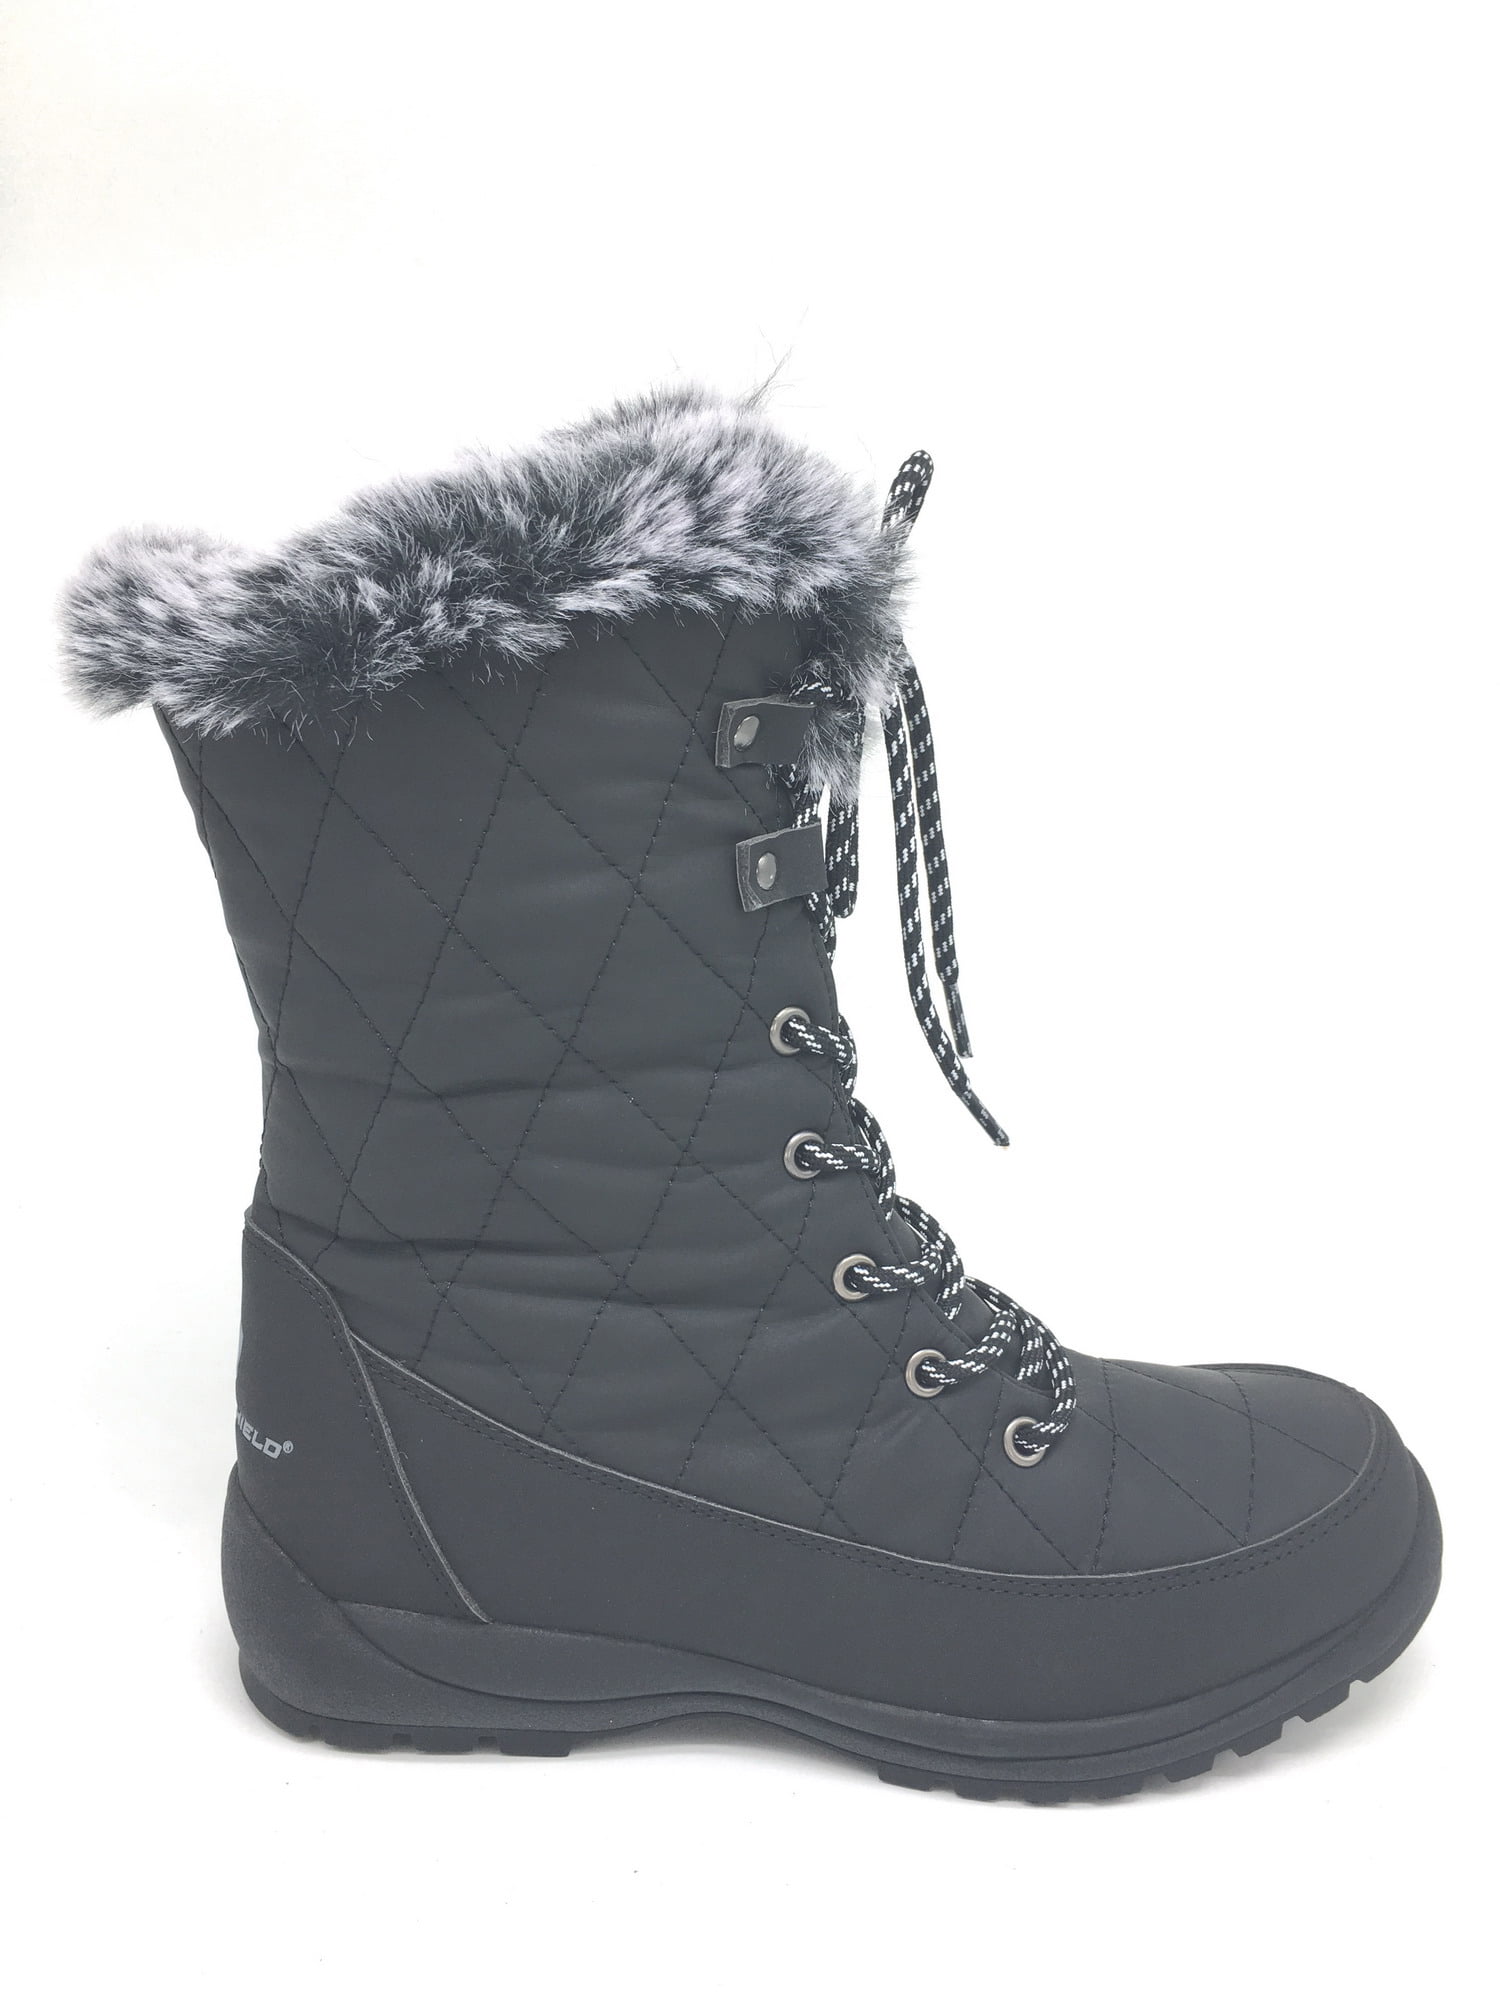 arctic shield women's boots